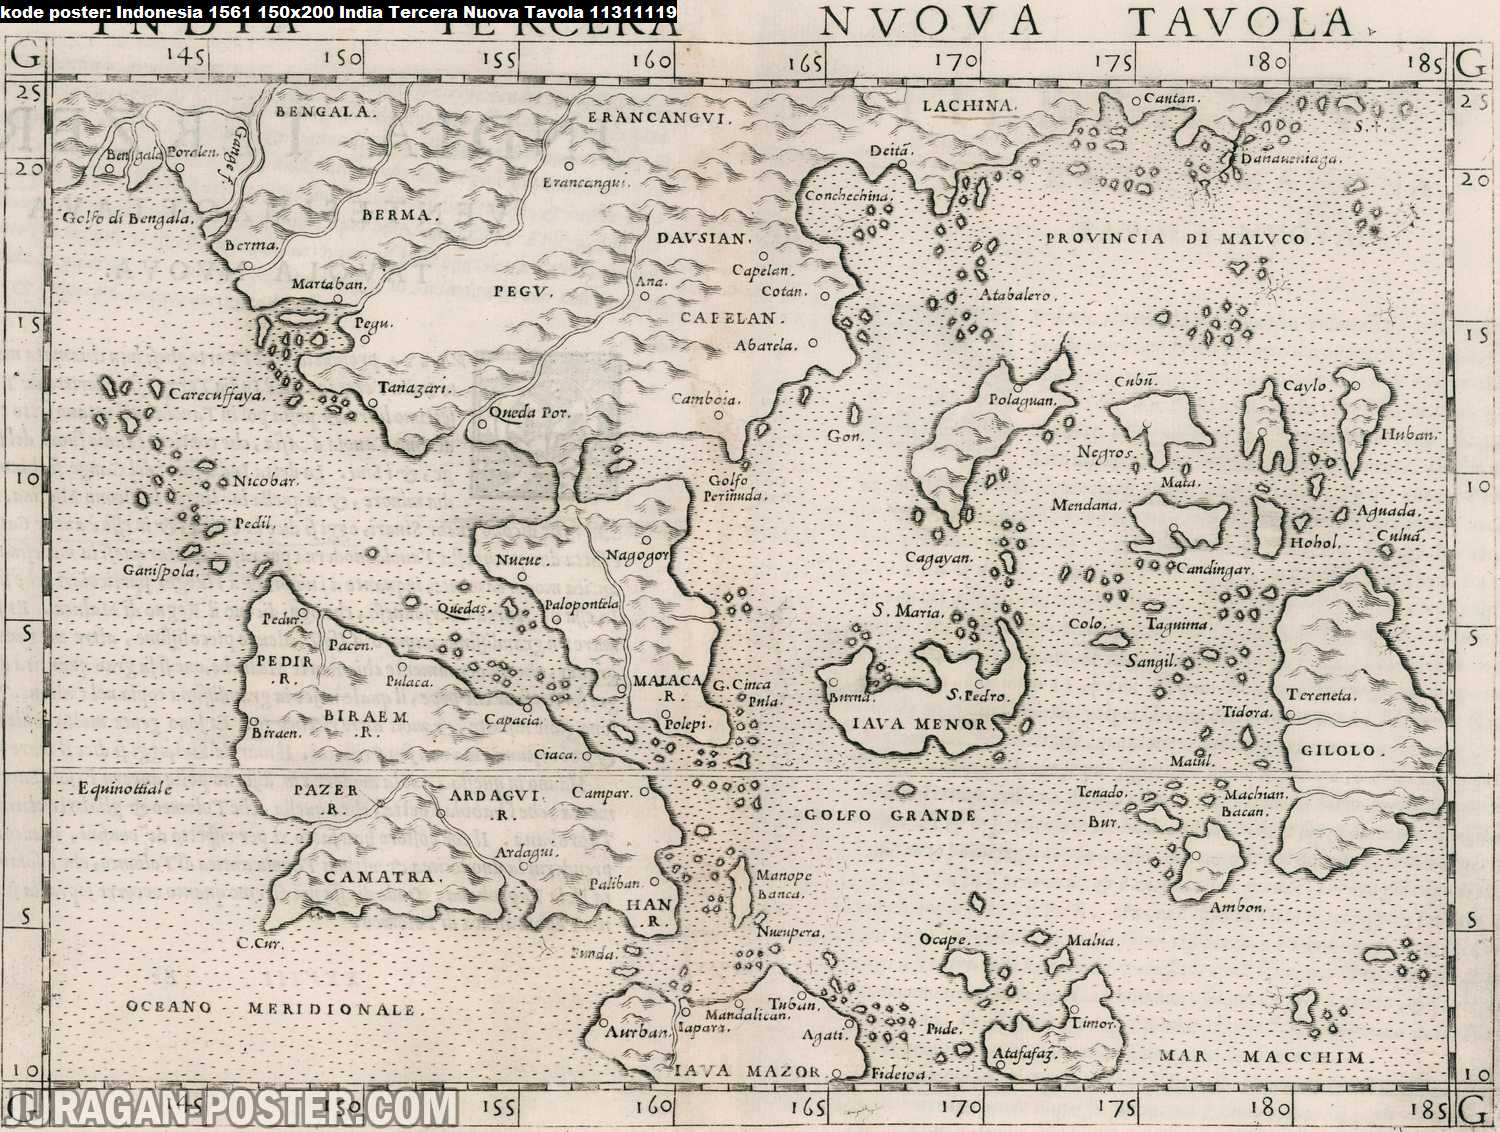 peta indonesia kuno tahun 1561